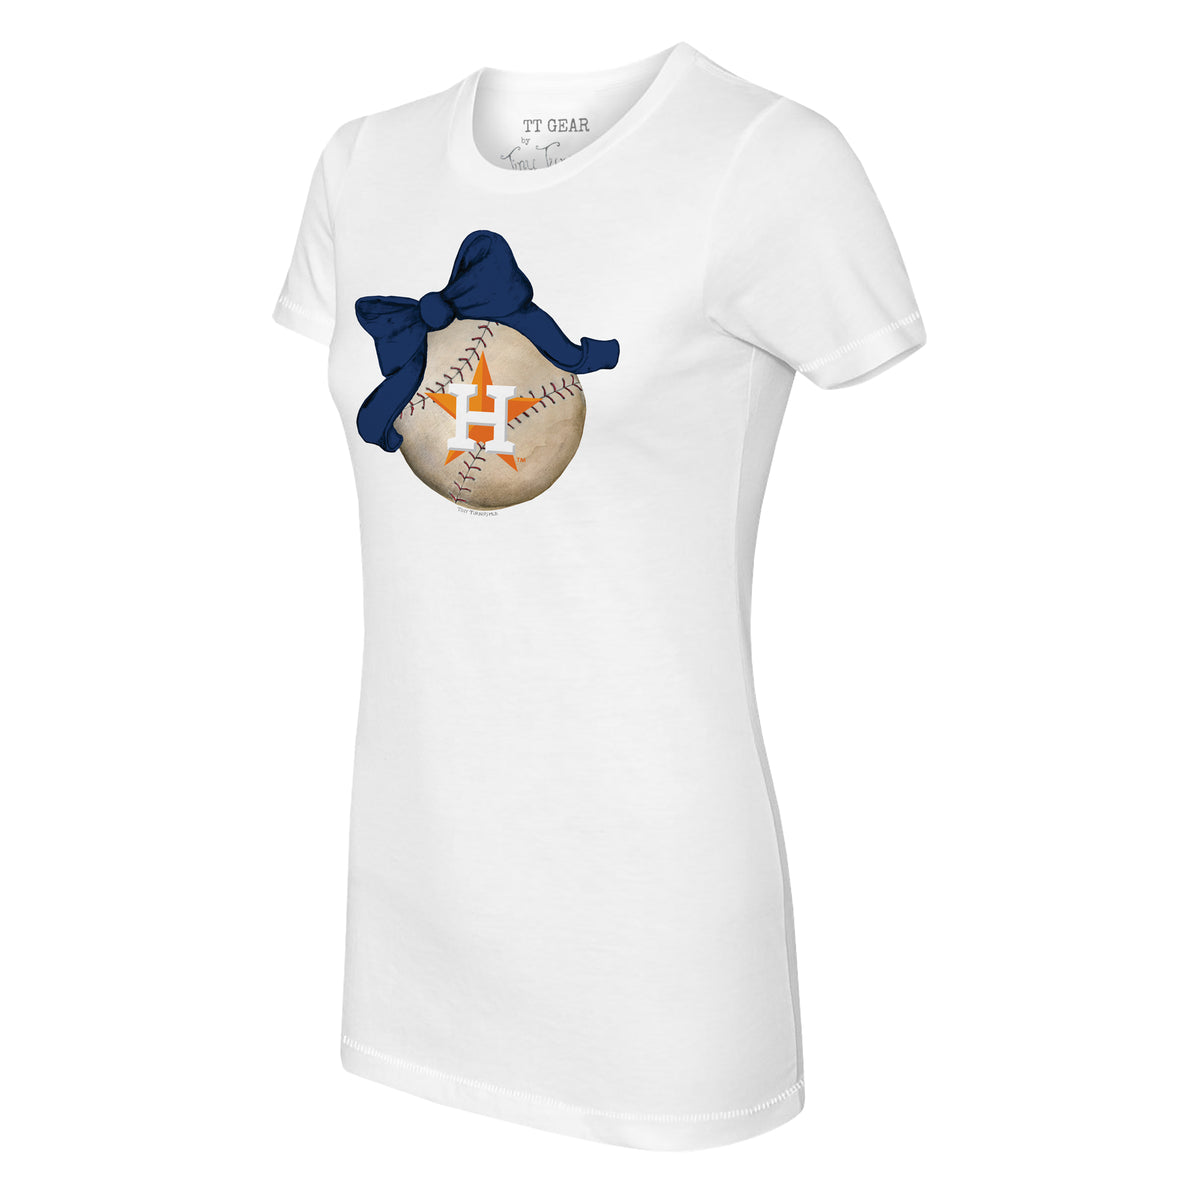 Houston Astros Baseball Love Tee Shirt Women's Small / White